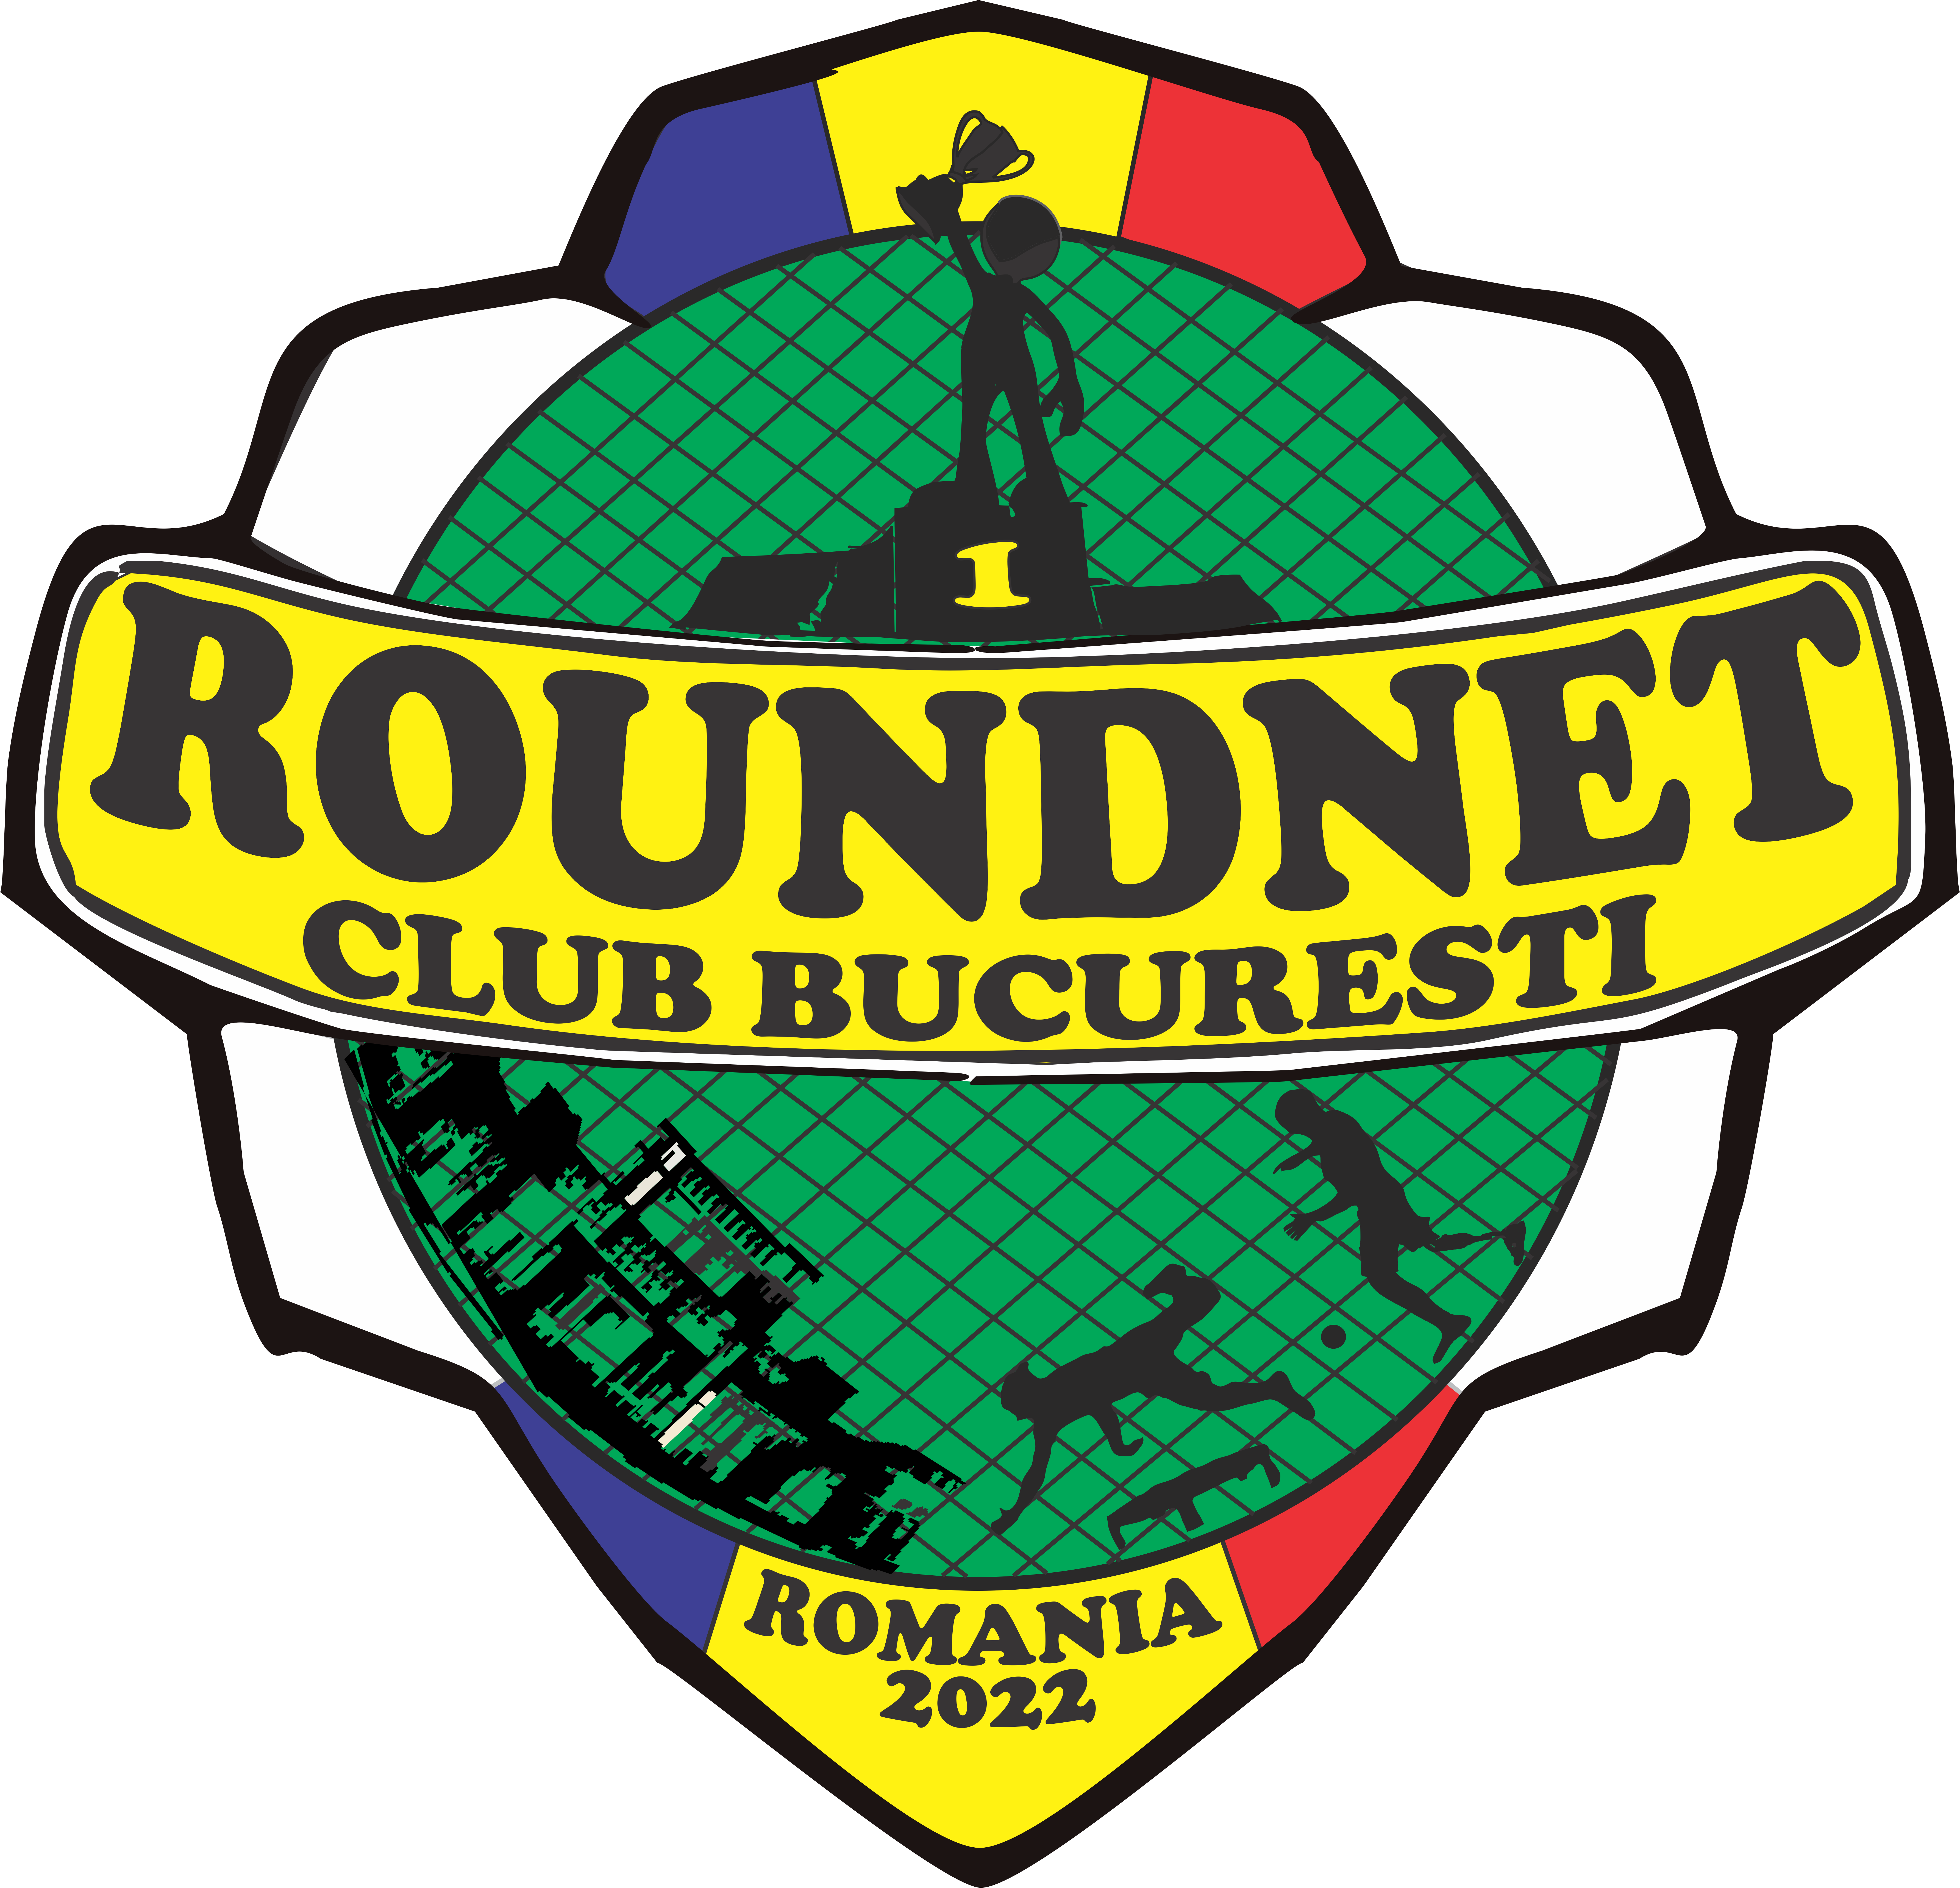 Roundnet Club Bucuresti  logo